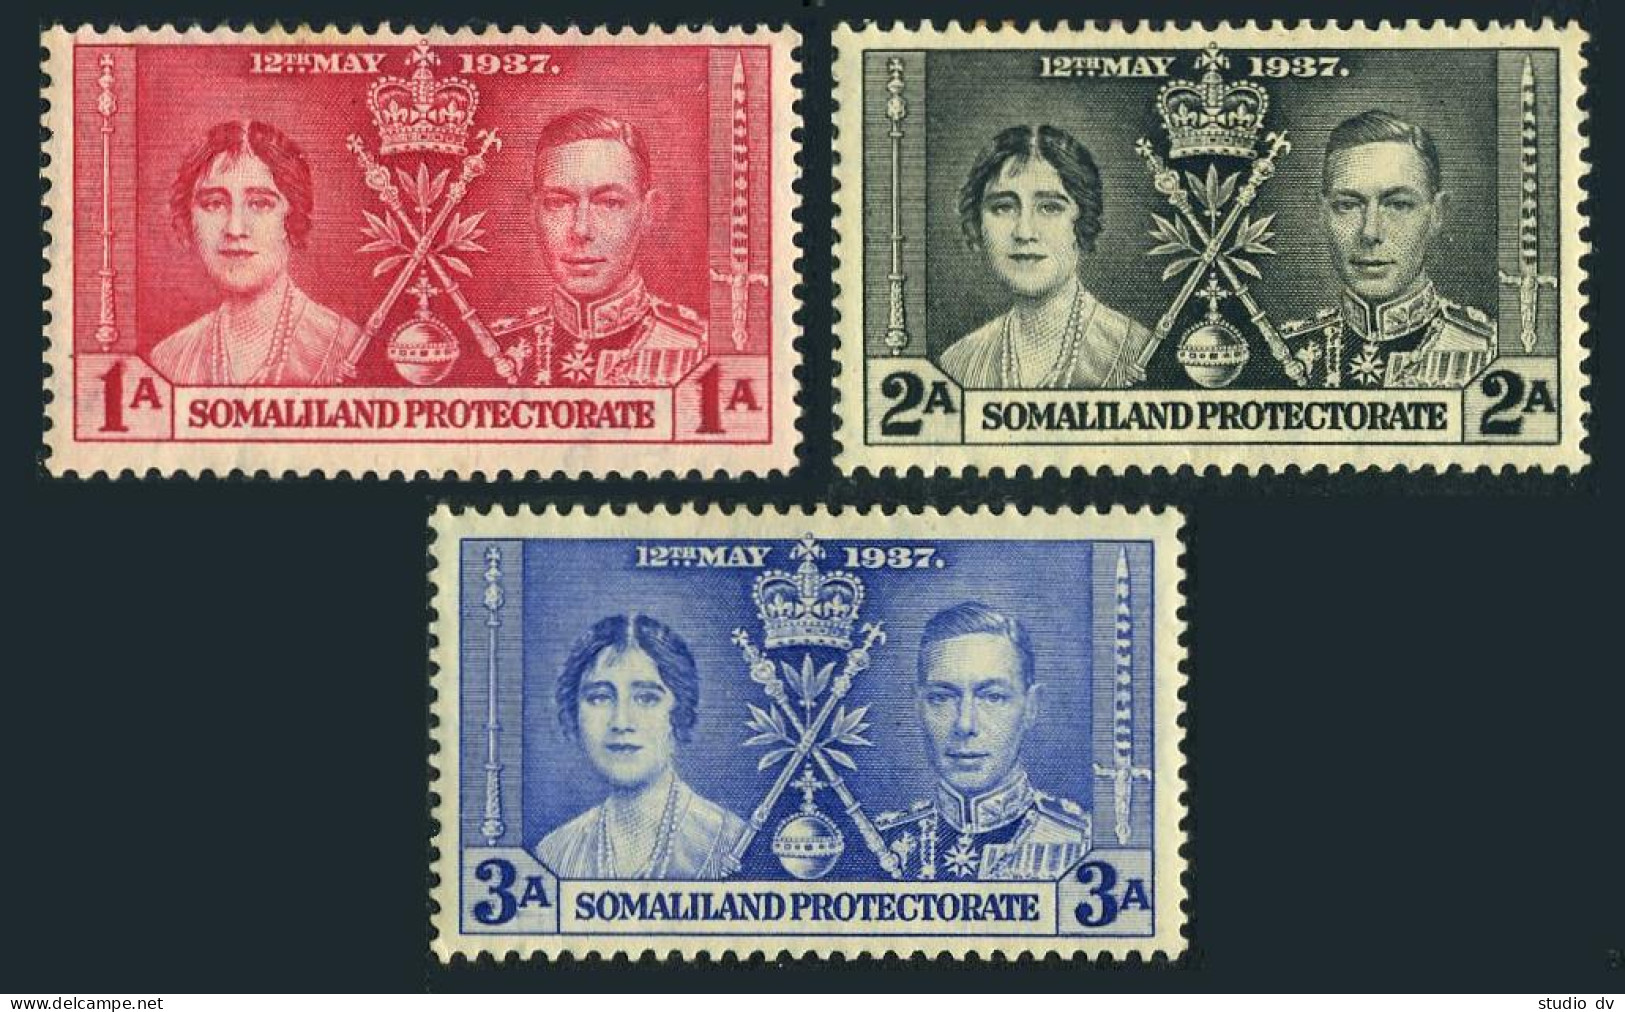 Somaliland 81-83,hinged.Mi 74-76. Coronation 1937:Queen Elizabeth,King George VI - Mali (1959-...)